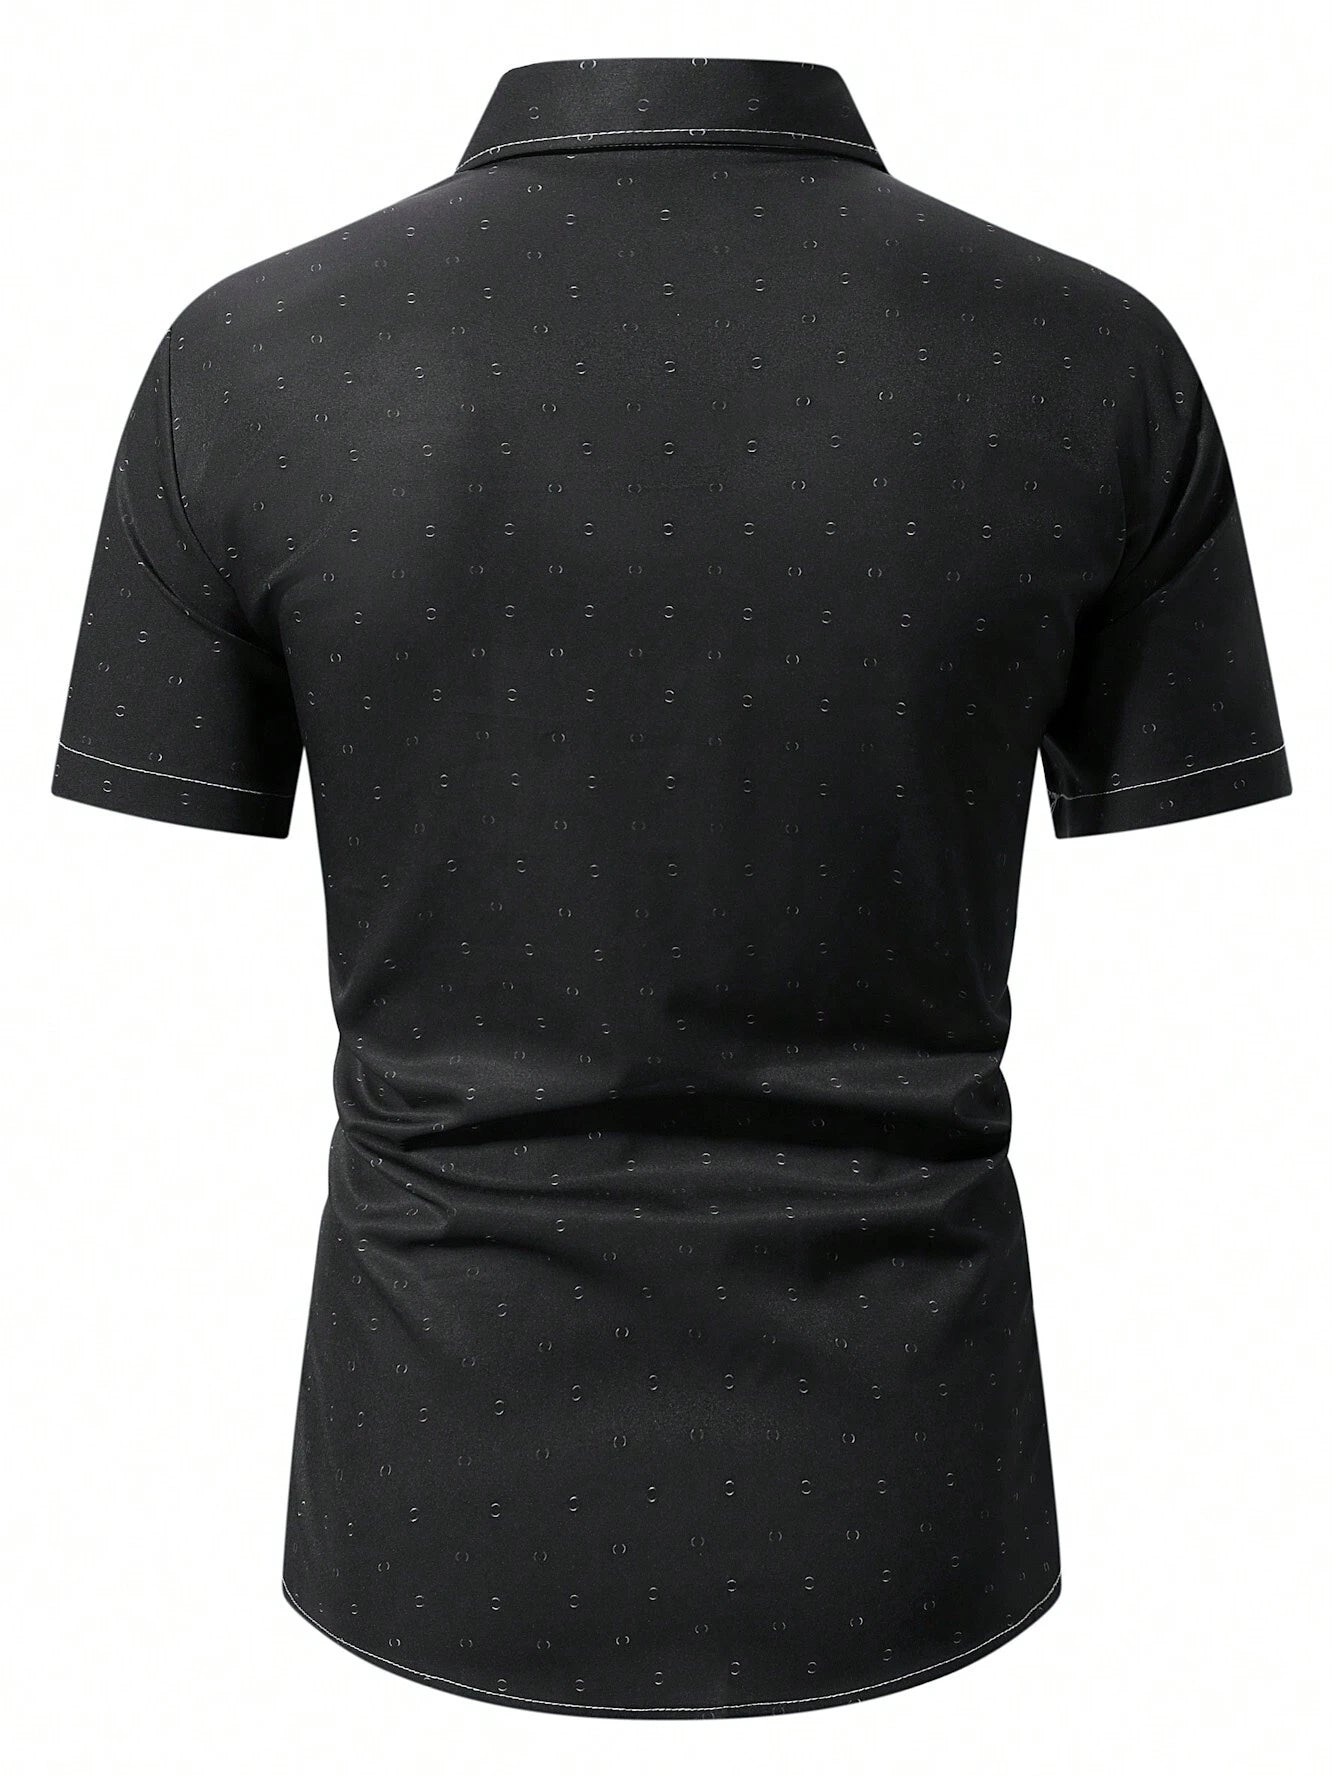 Men's Star Print Casual Button-Down Shirt